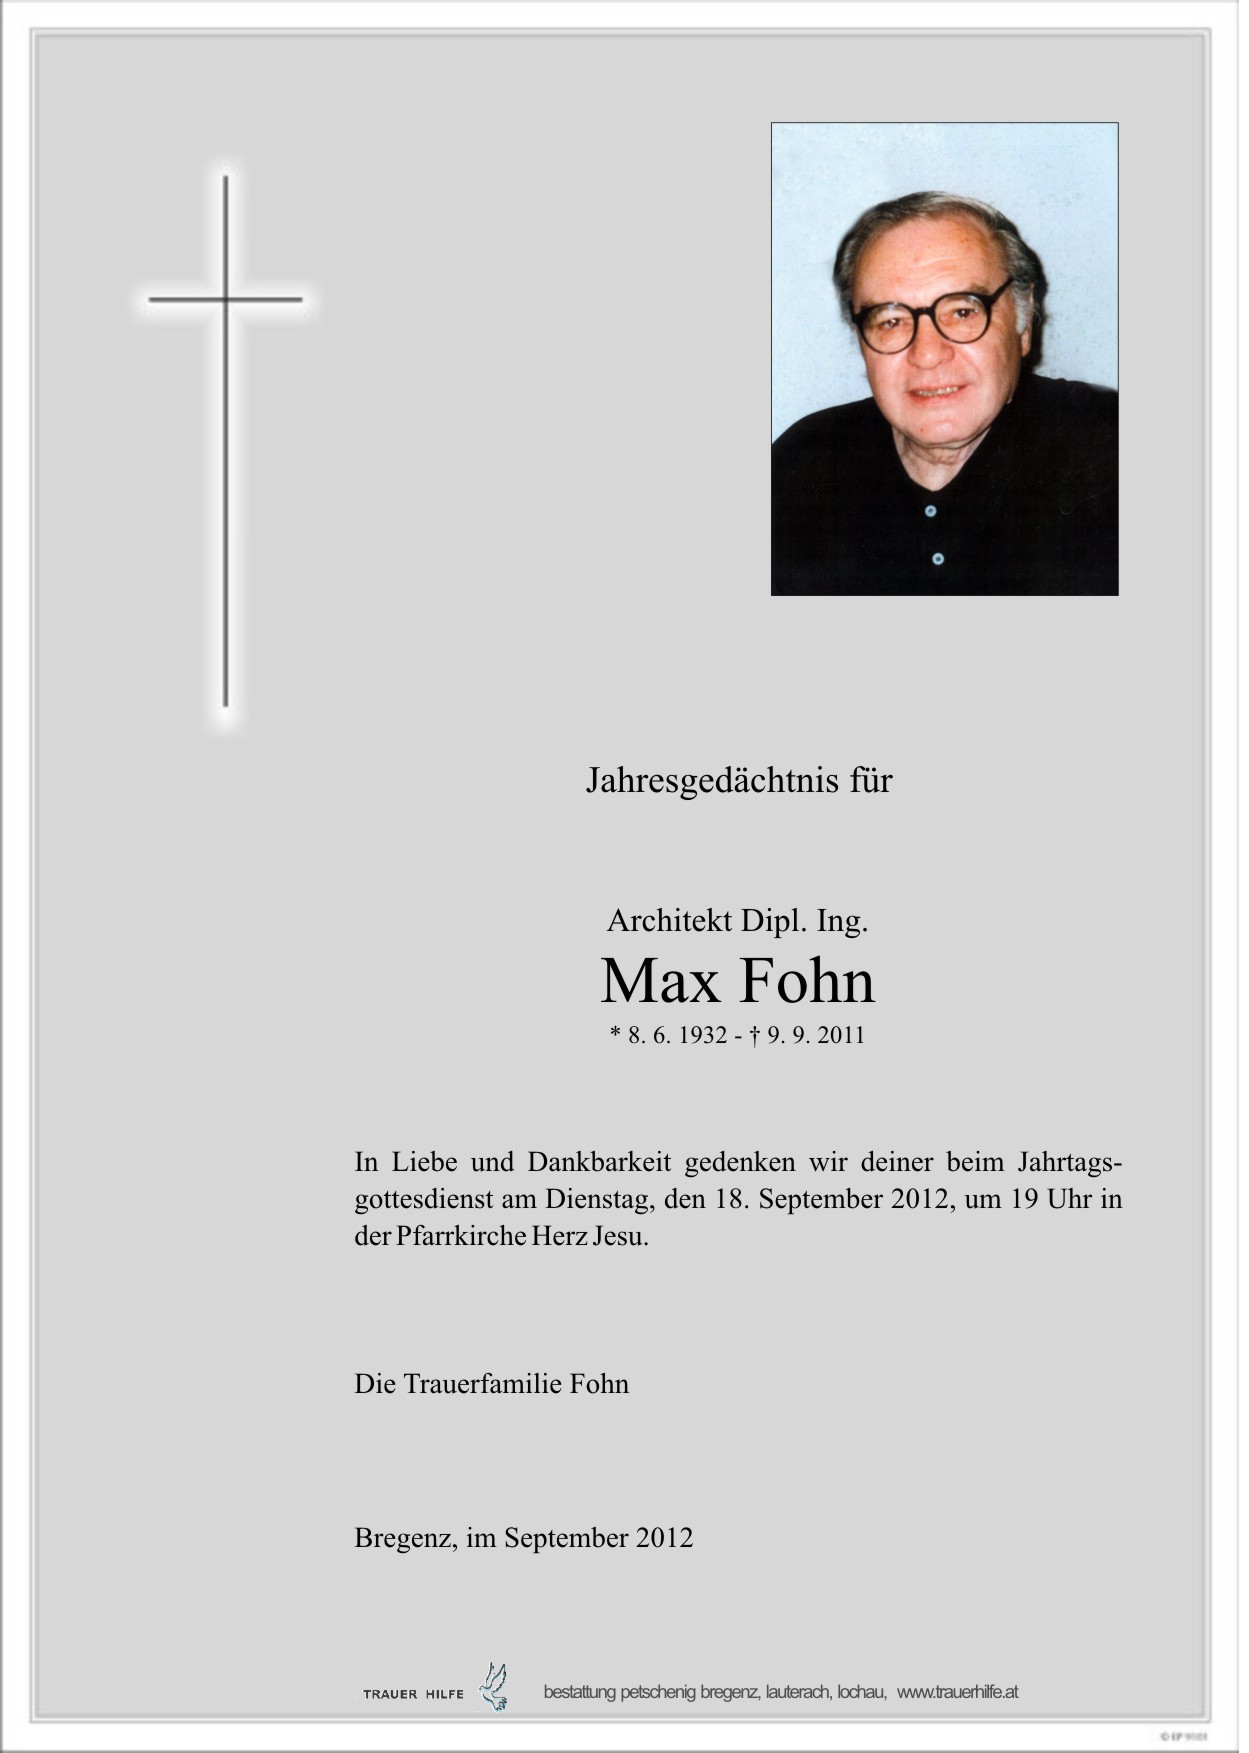 Max Fohn